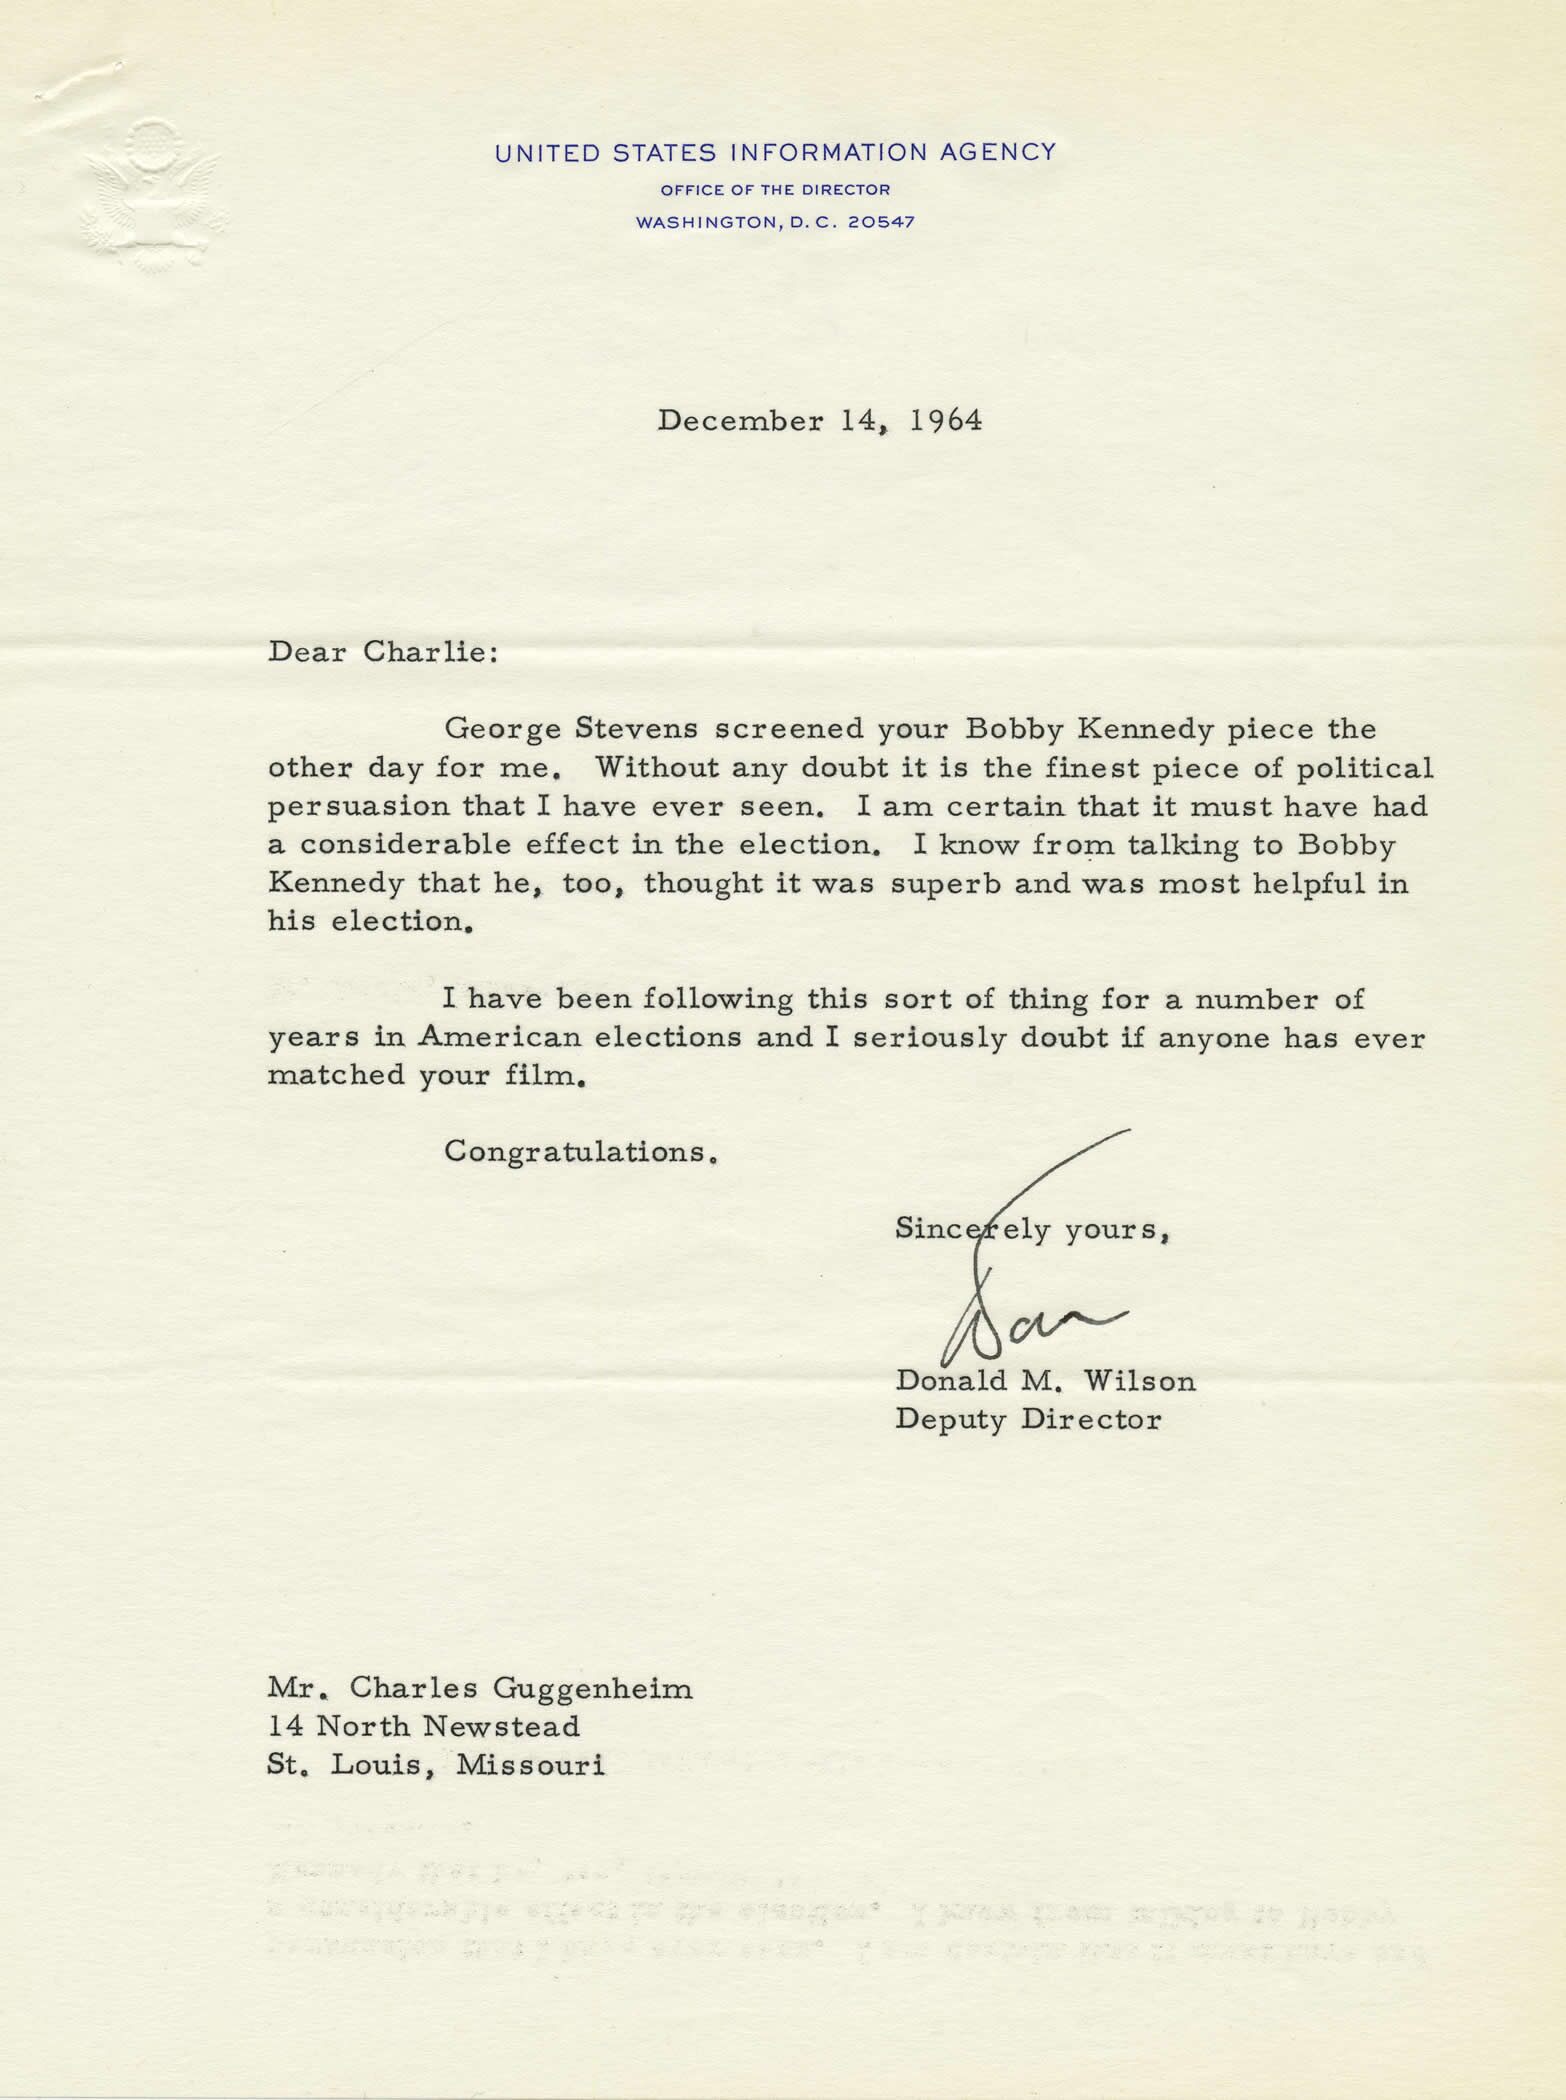 Letter from Donald M. Wilson to Charles Guggenheim, December 14, 1964 